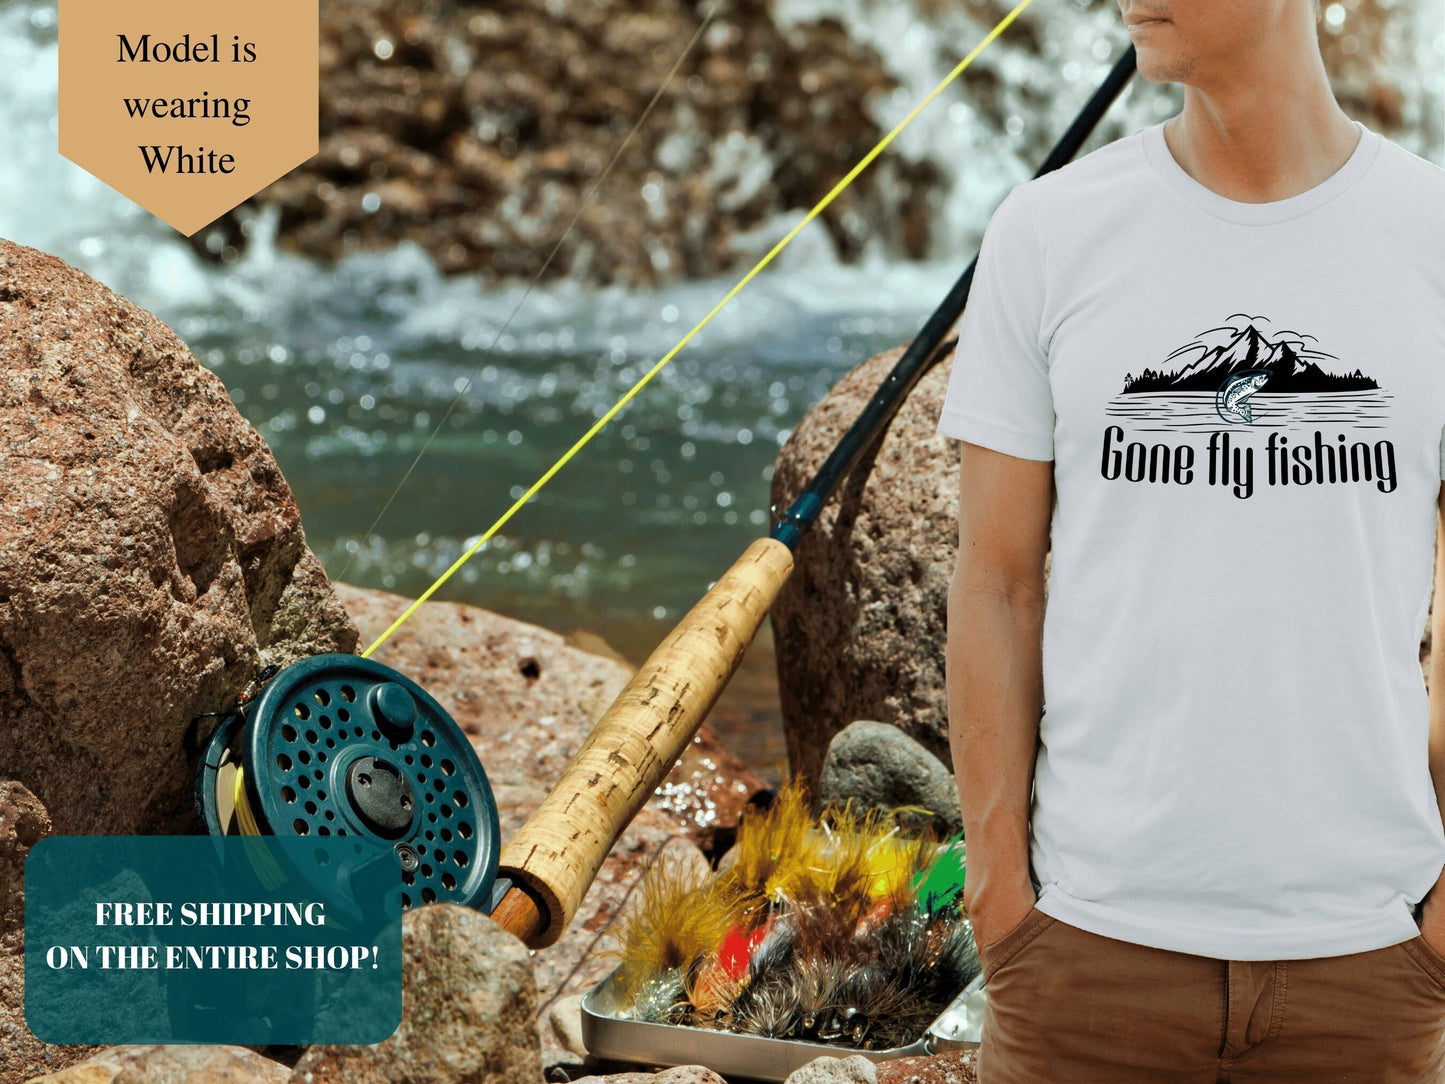 Fly Fishing Shirt, Fly Fishing Gifts for Men, Fly Fishing T-Shirt, Fishing T-Shirt, Gone Fly Fishing, Angler Shirt